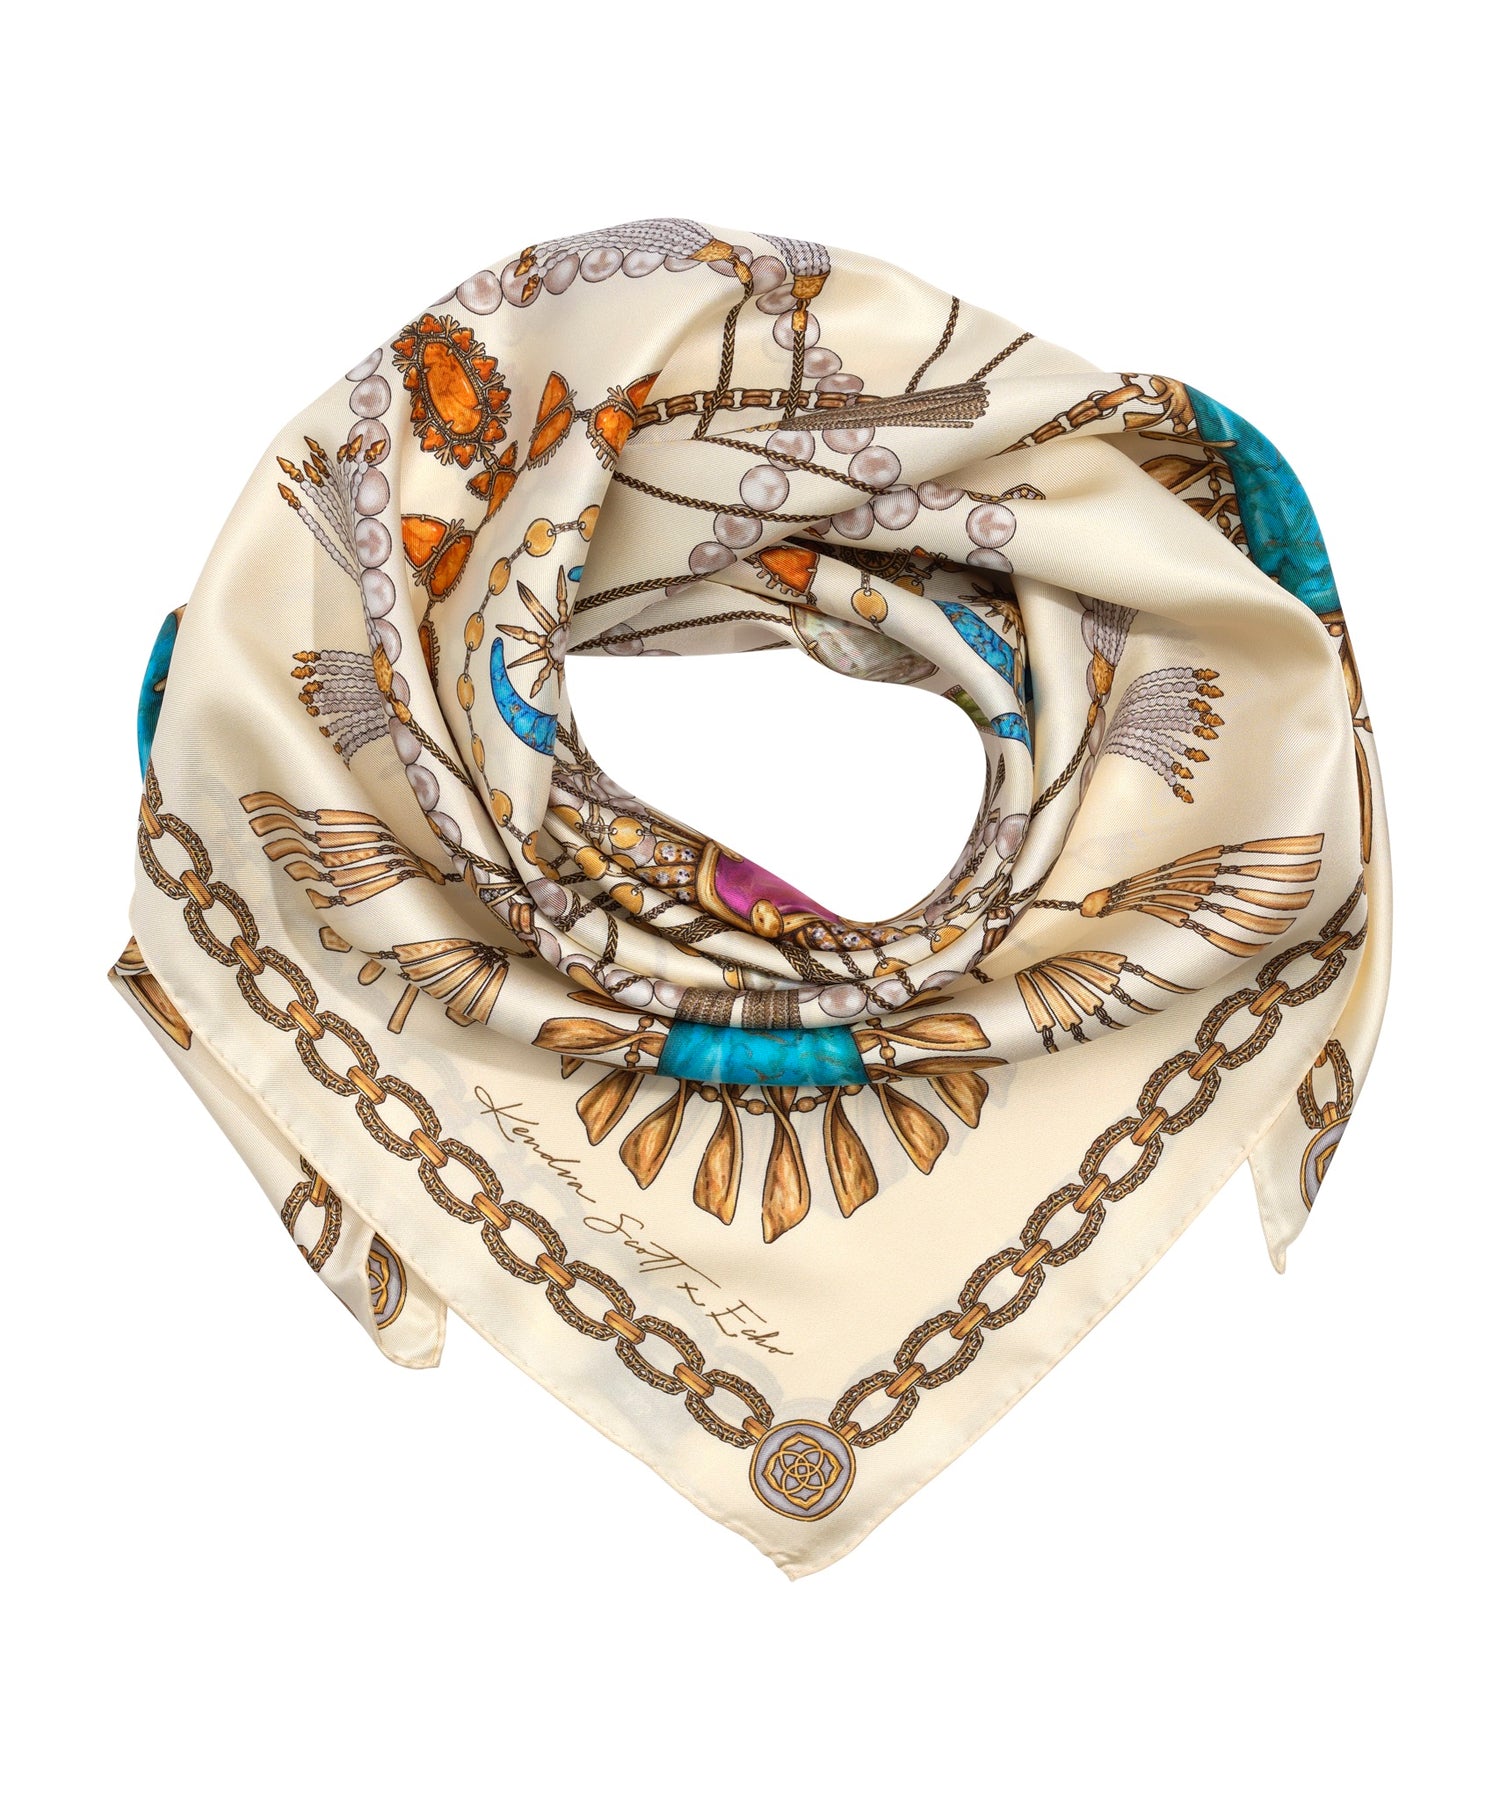 Kendra Scott Echo100 Silk Scarf featuring jewelry